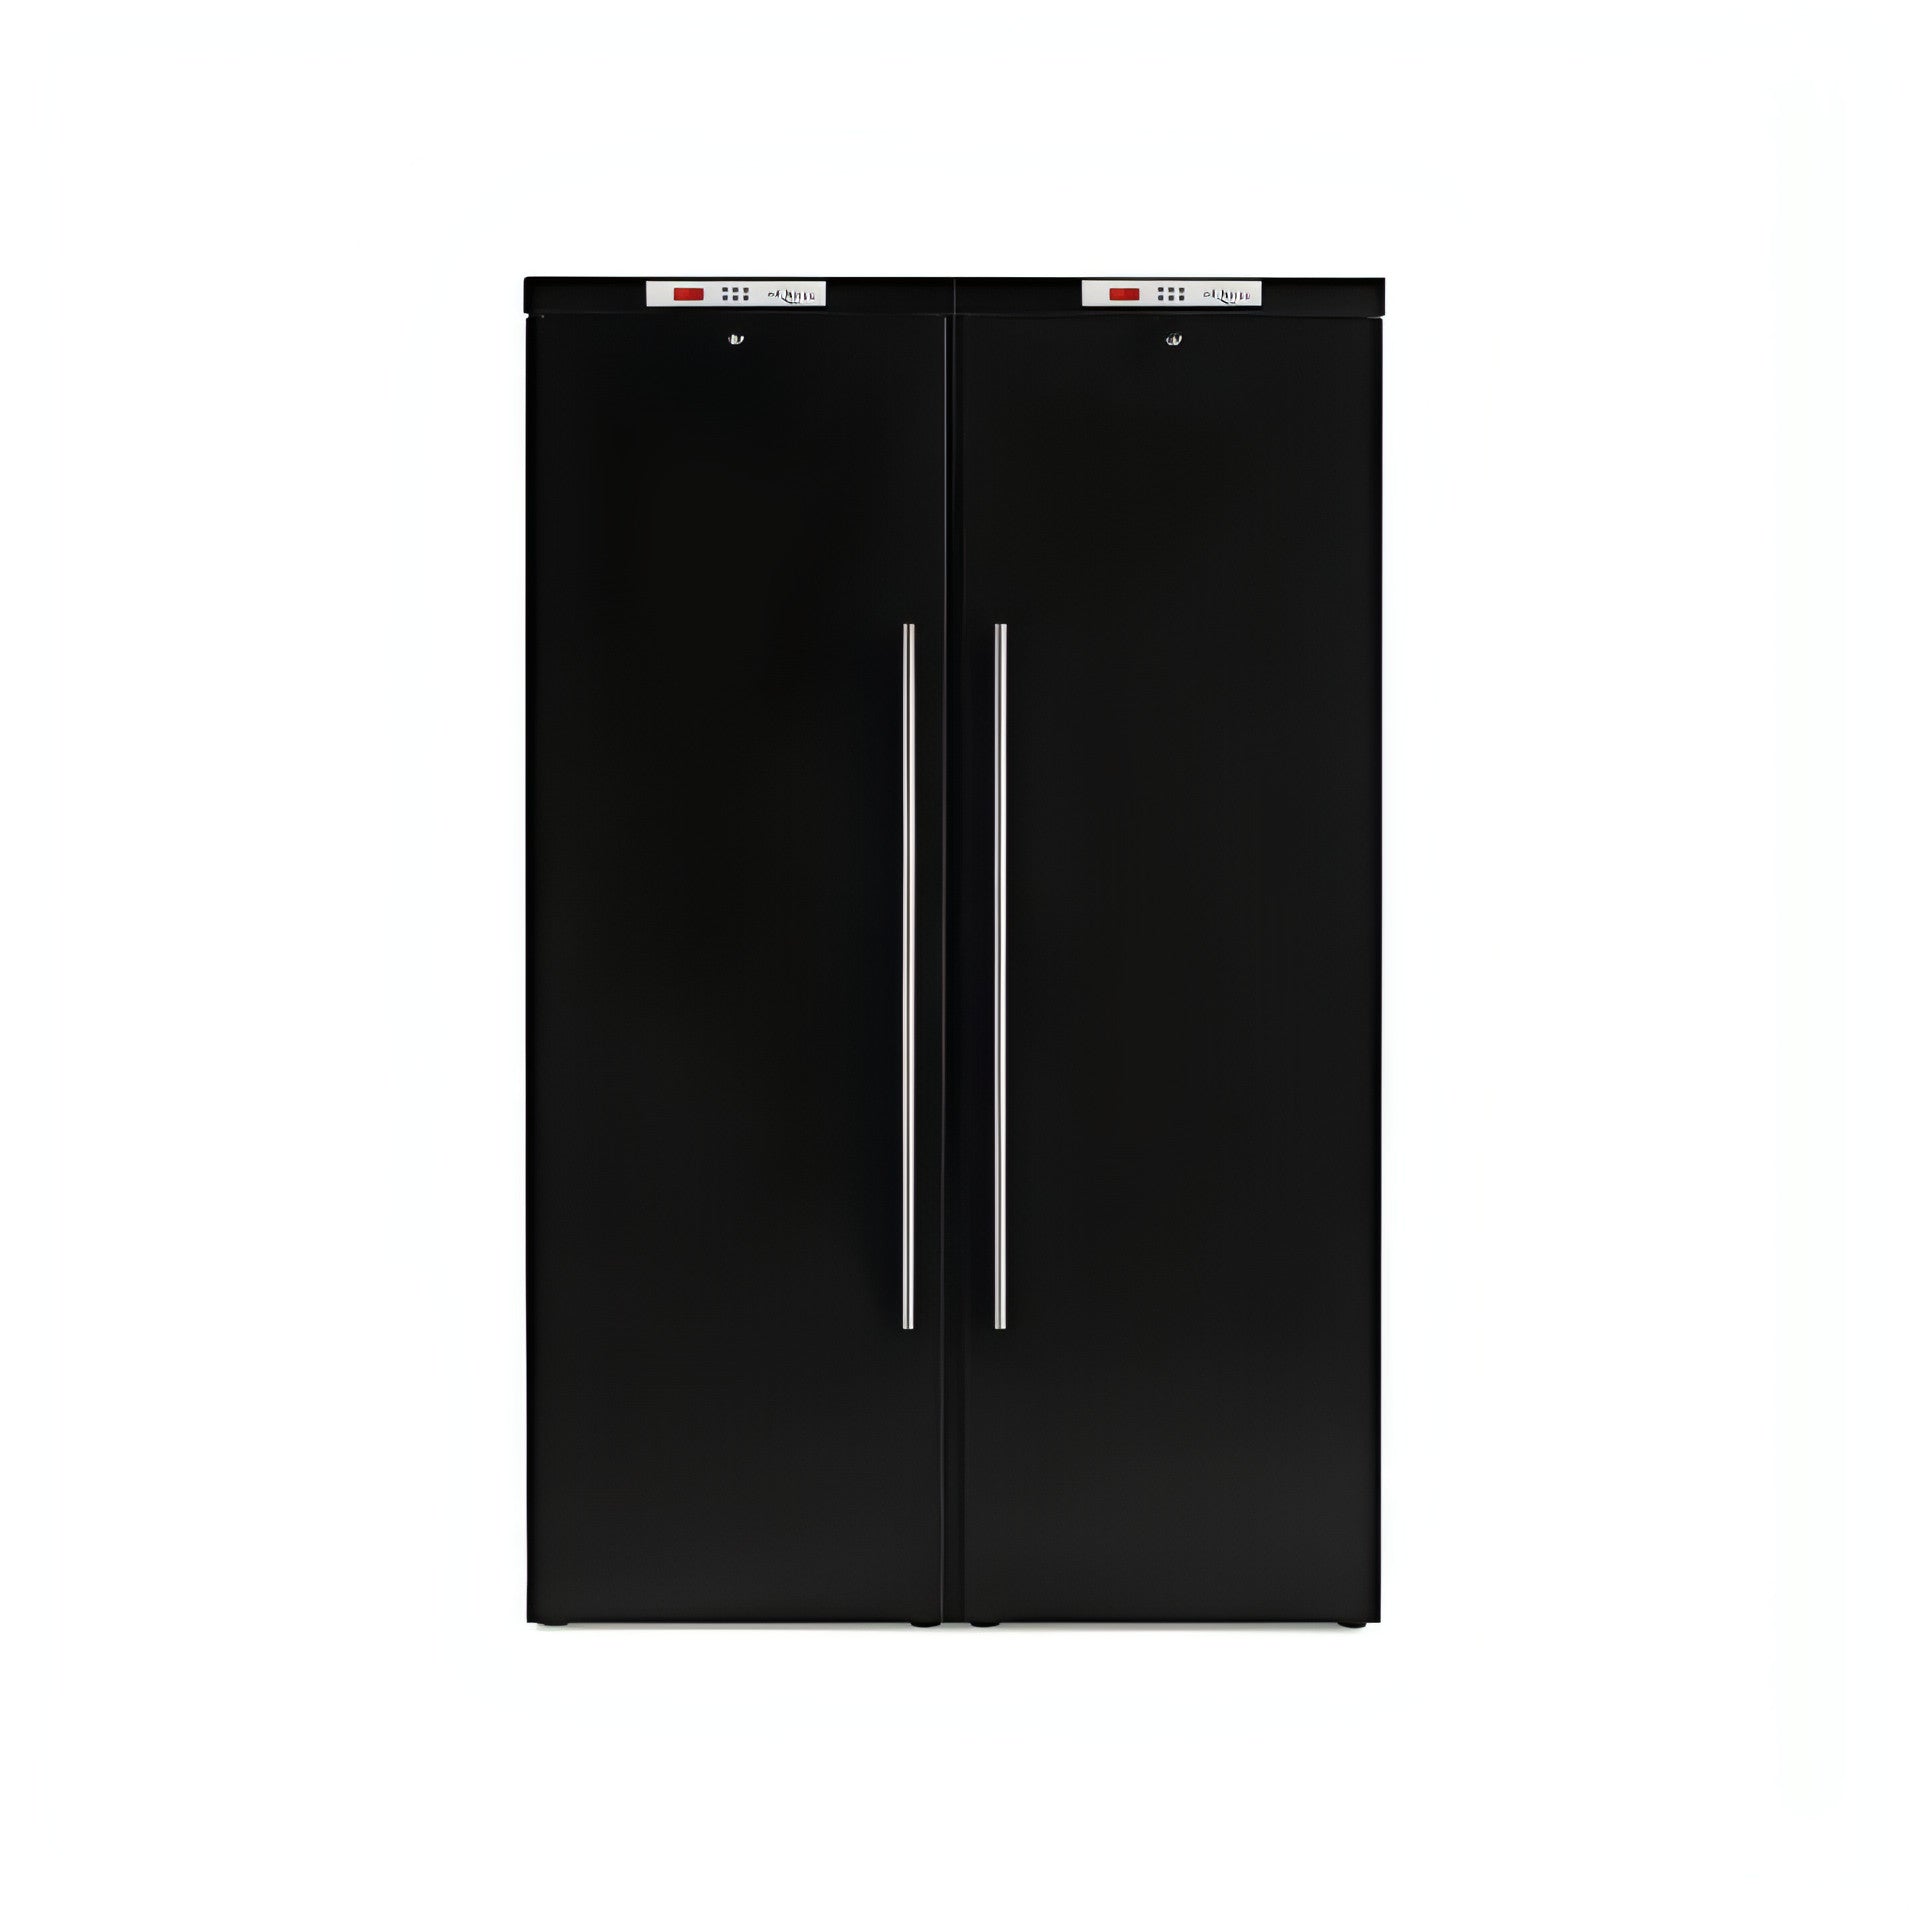 mQuvée - Freestanding - Wine Cabinet - WineStore 1200